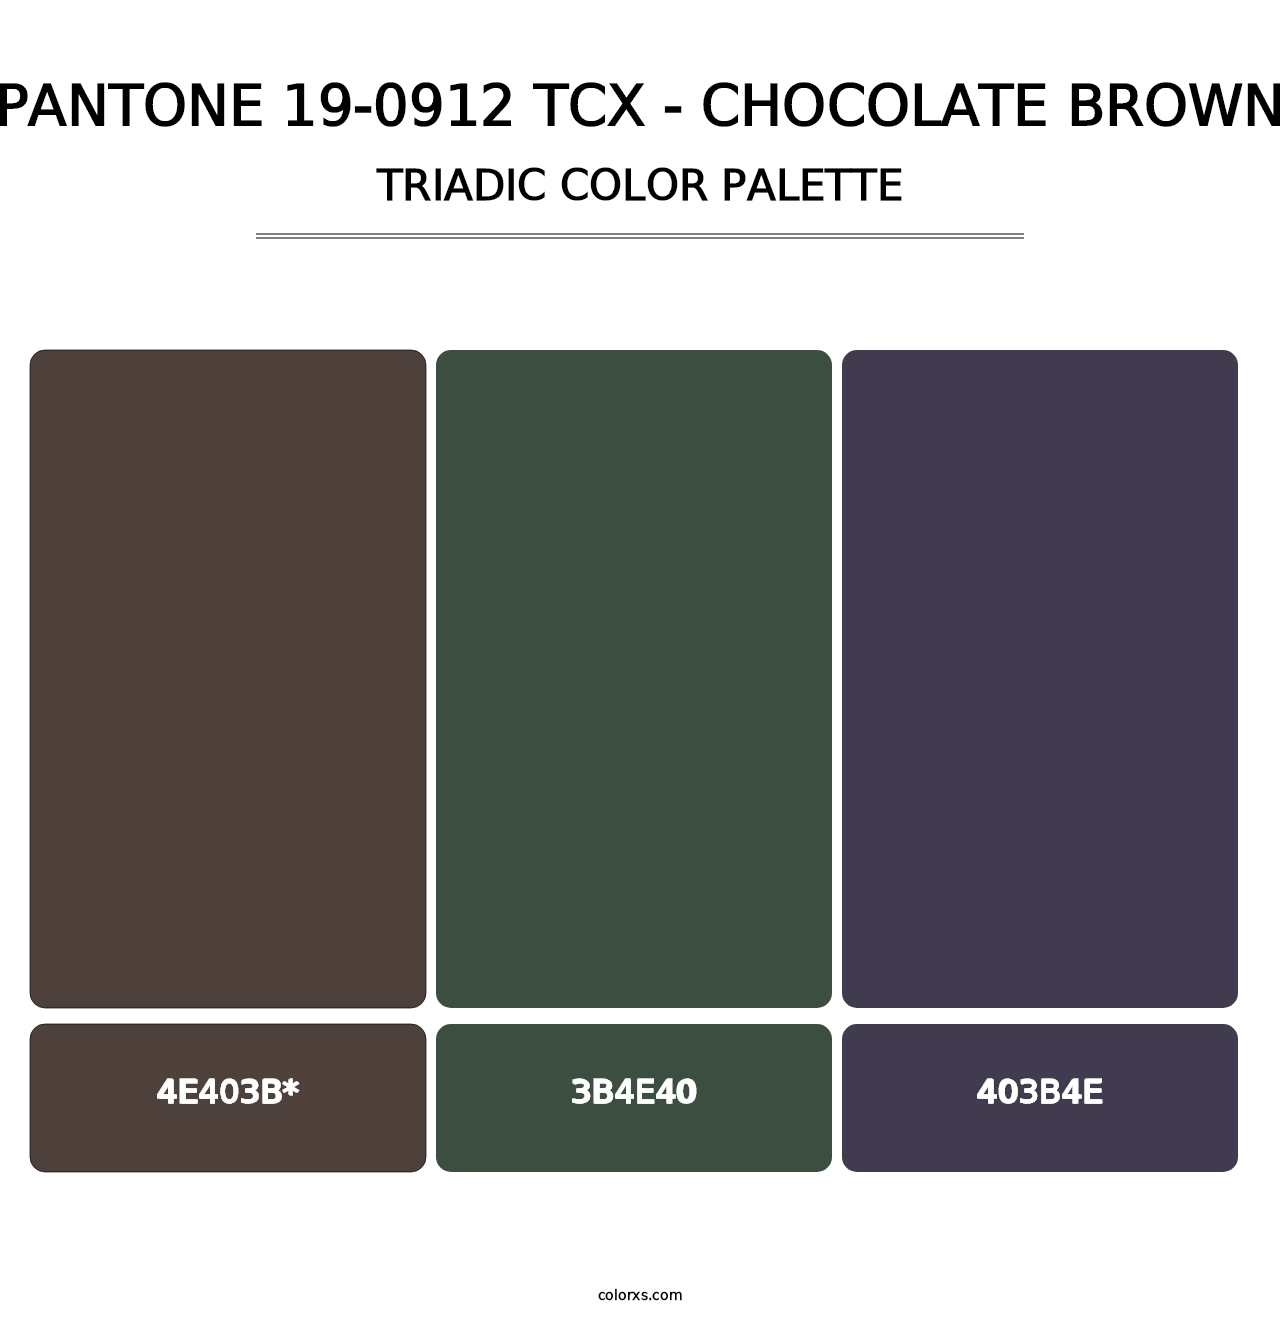 PANTONE 19-0912 TCX - Chocolate Brown - Triadic Color Palette